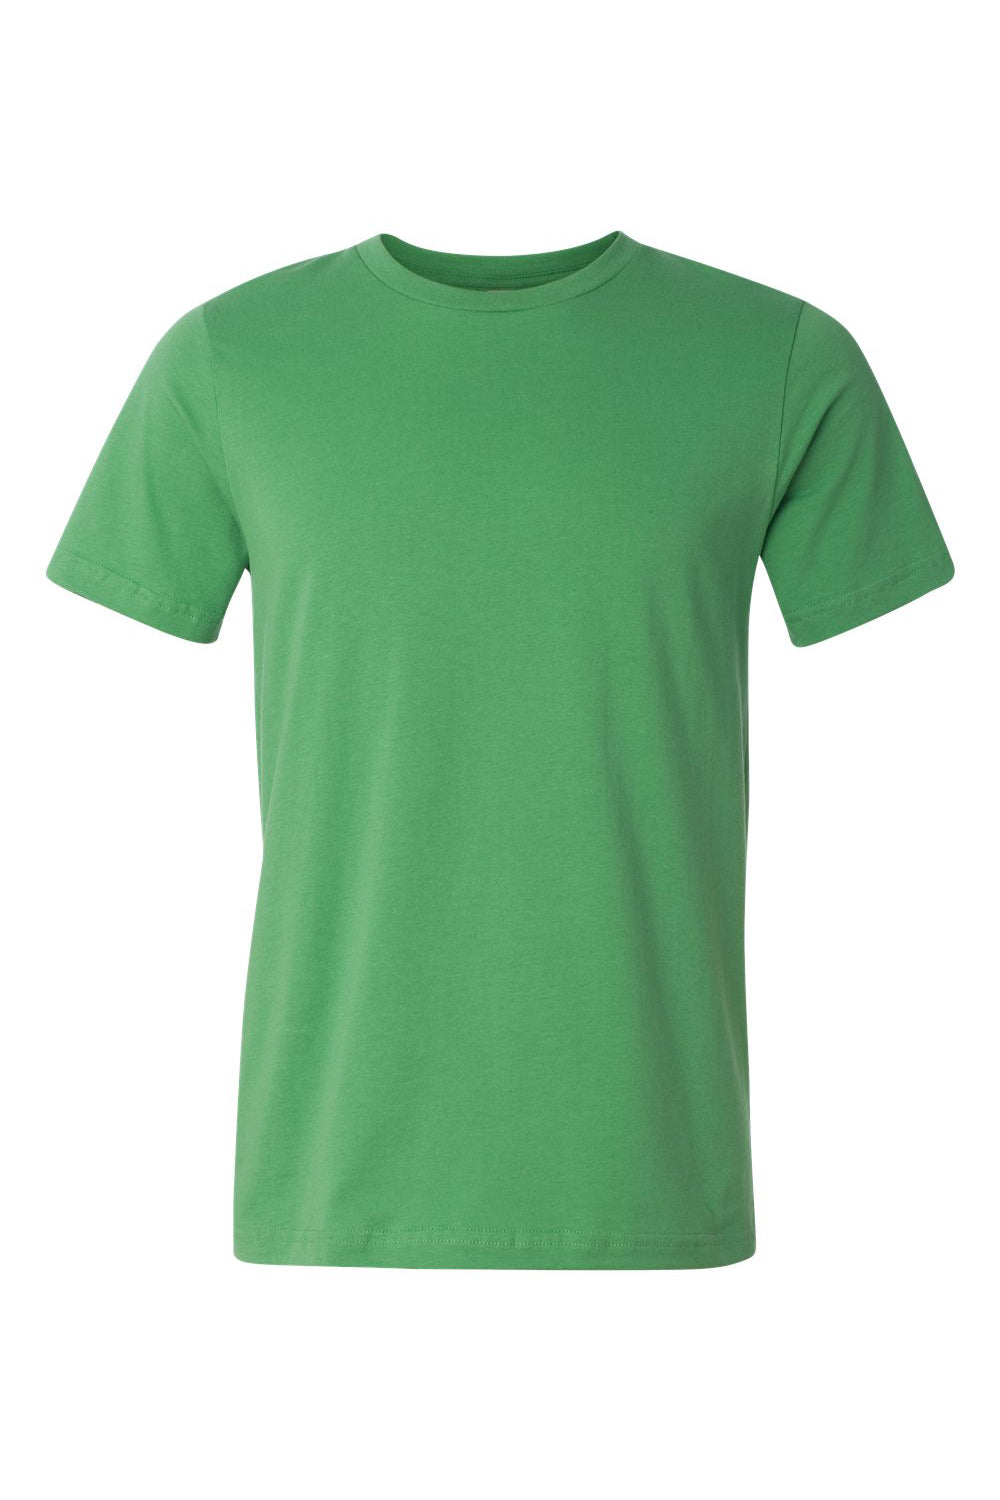 Bella + Canvas 3001U/3001USA Mens USA Made Jersey Short Sleeve Crewneck T-Shirt Leaf Green Flat Front